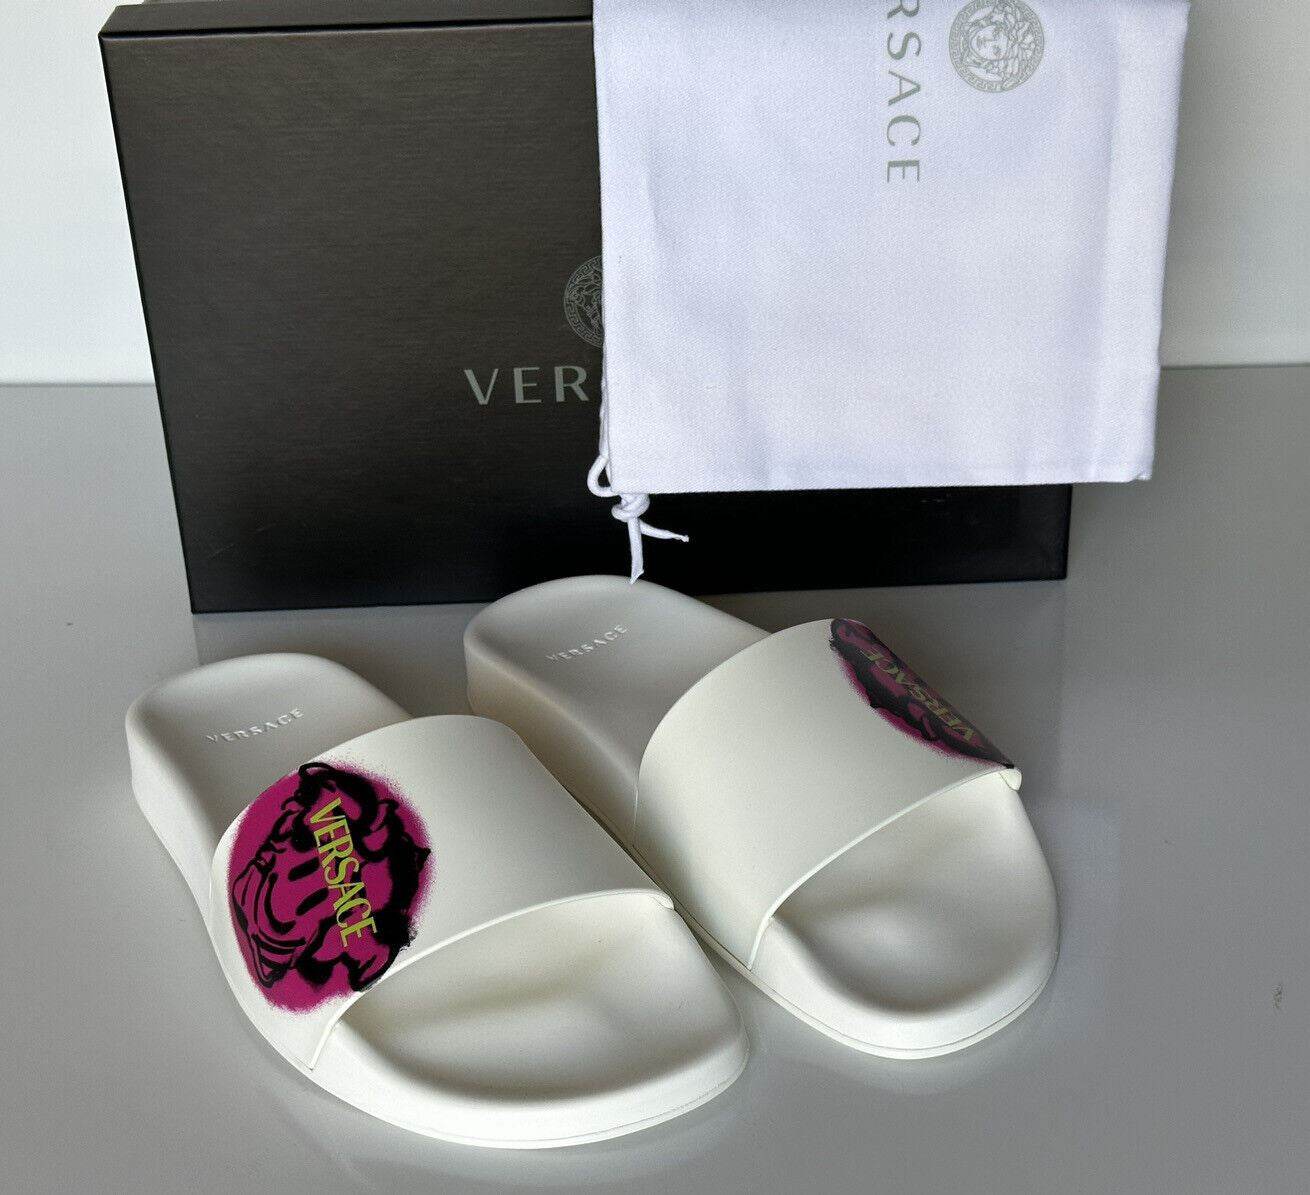 NIB $ 500 Versace Smiley Medusa Slides Sandalen Weiß/Fuxia 8 US DSR609CN Italien 